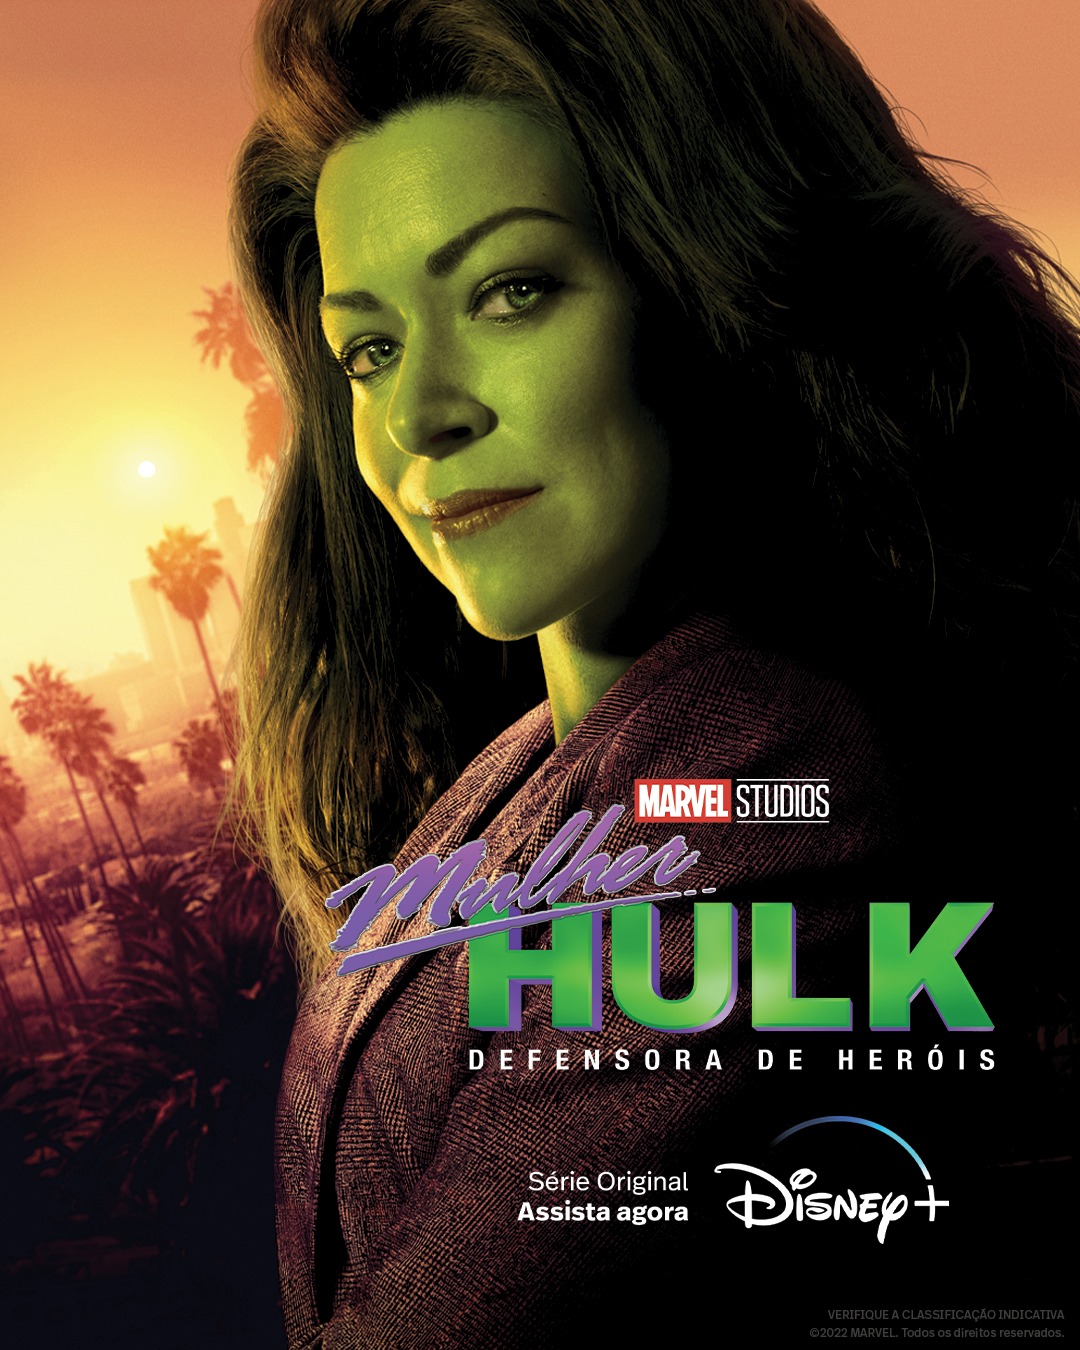 Mulher-Hulk' teve o DOBRO de audiência de 'Ms. Marvel' na Dinsey+